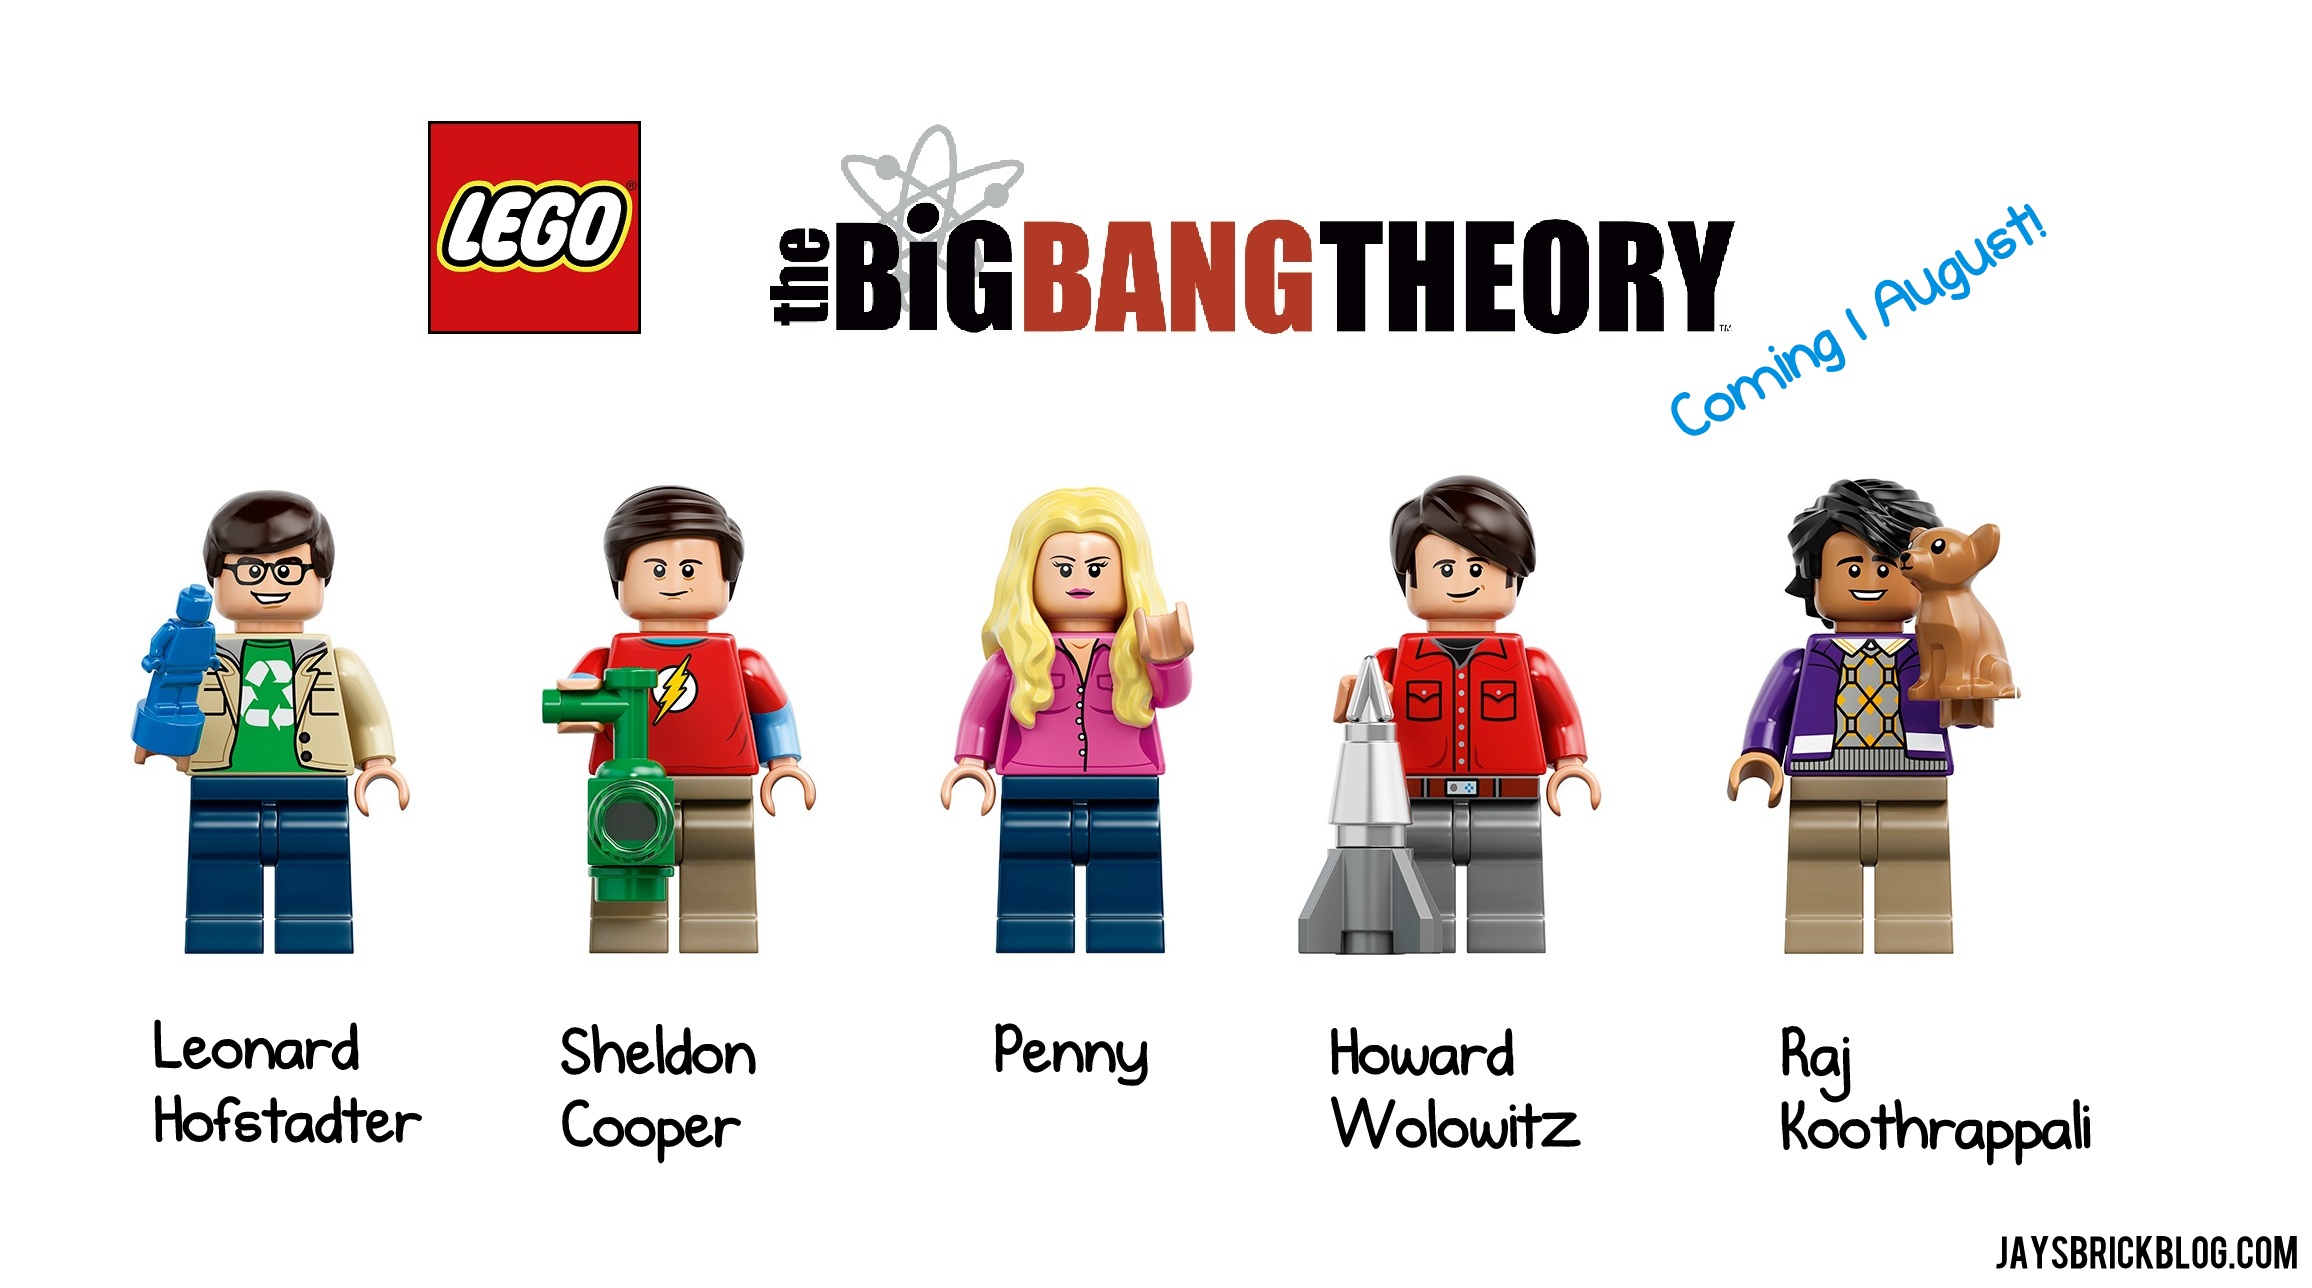 Spanien redde Mysterium Here's the new LEGO 21302 Big Bang Theory set! - Jay's Brick Blog